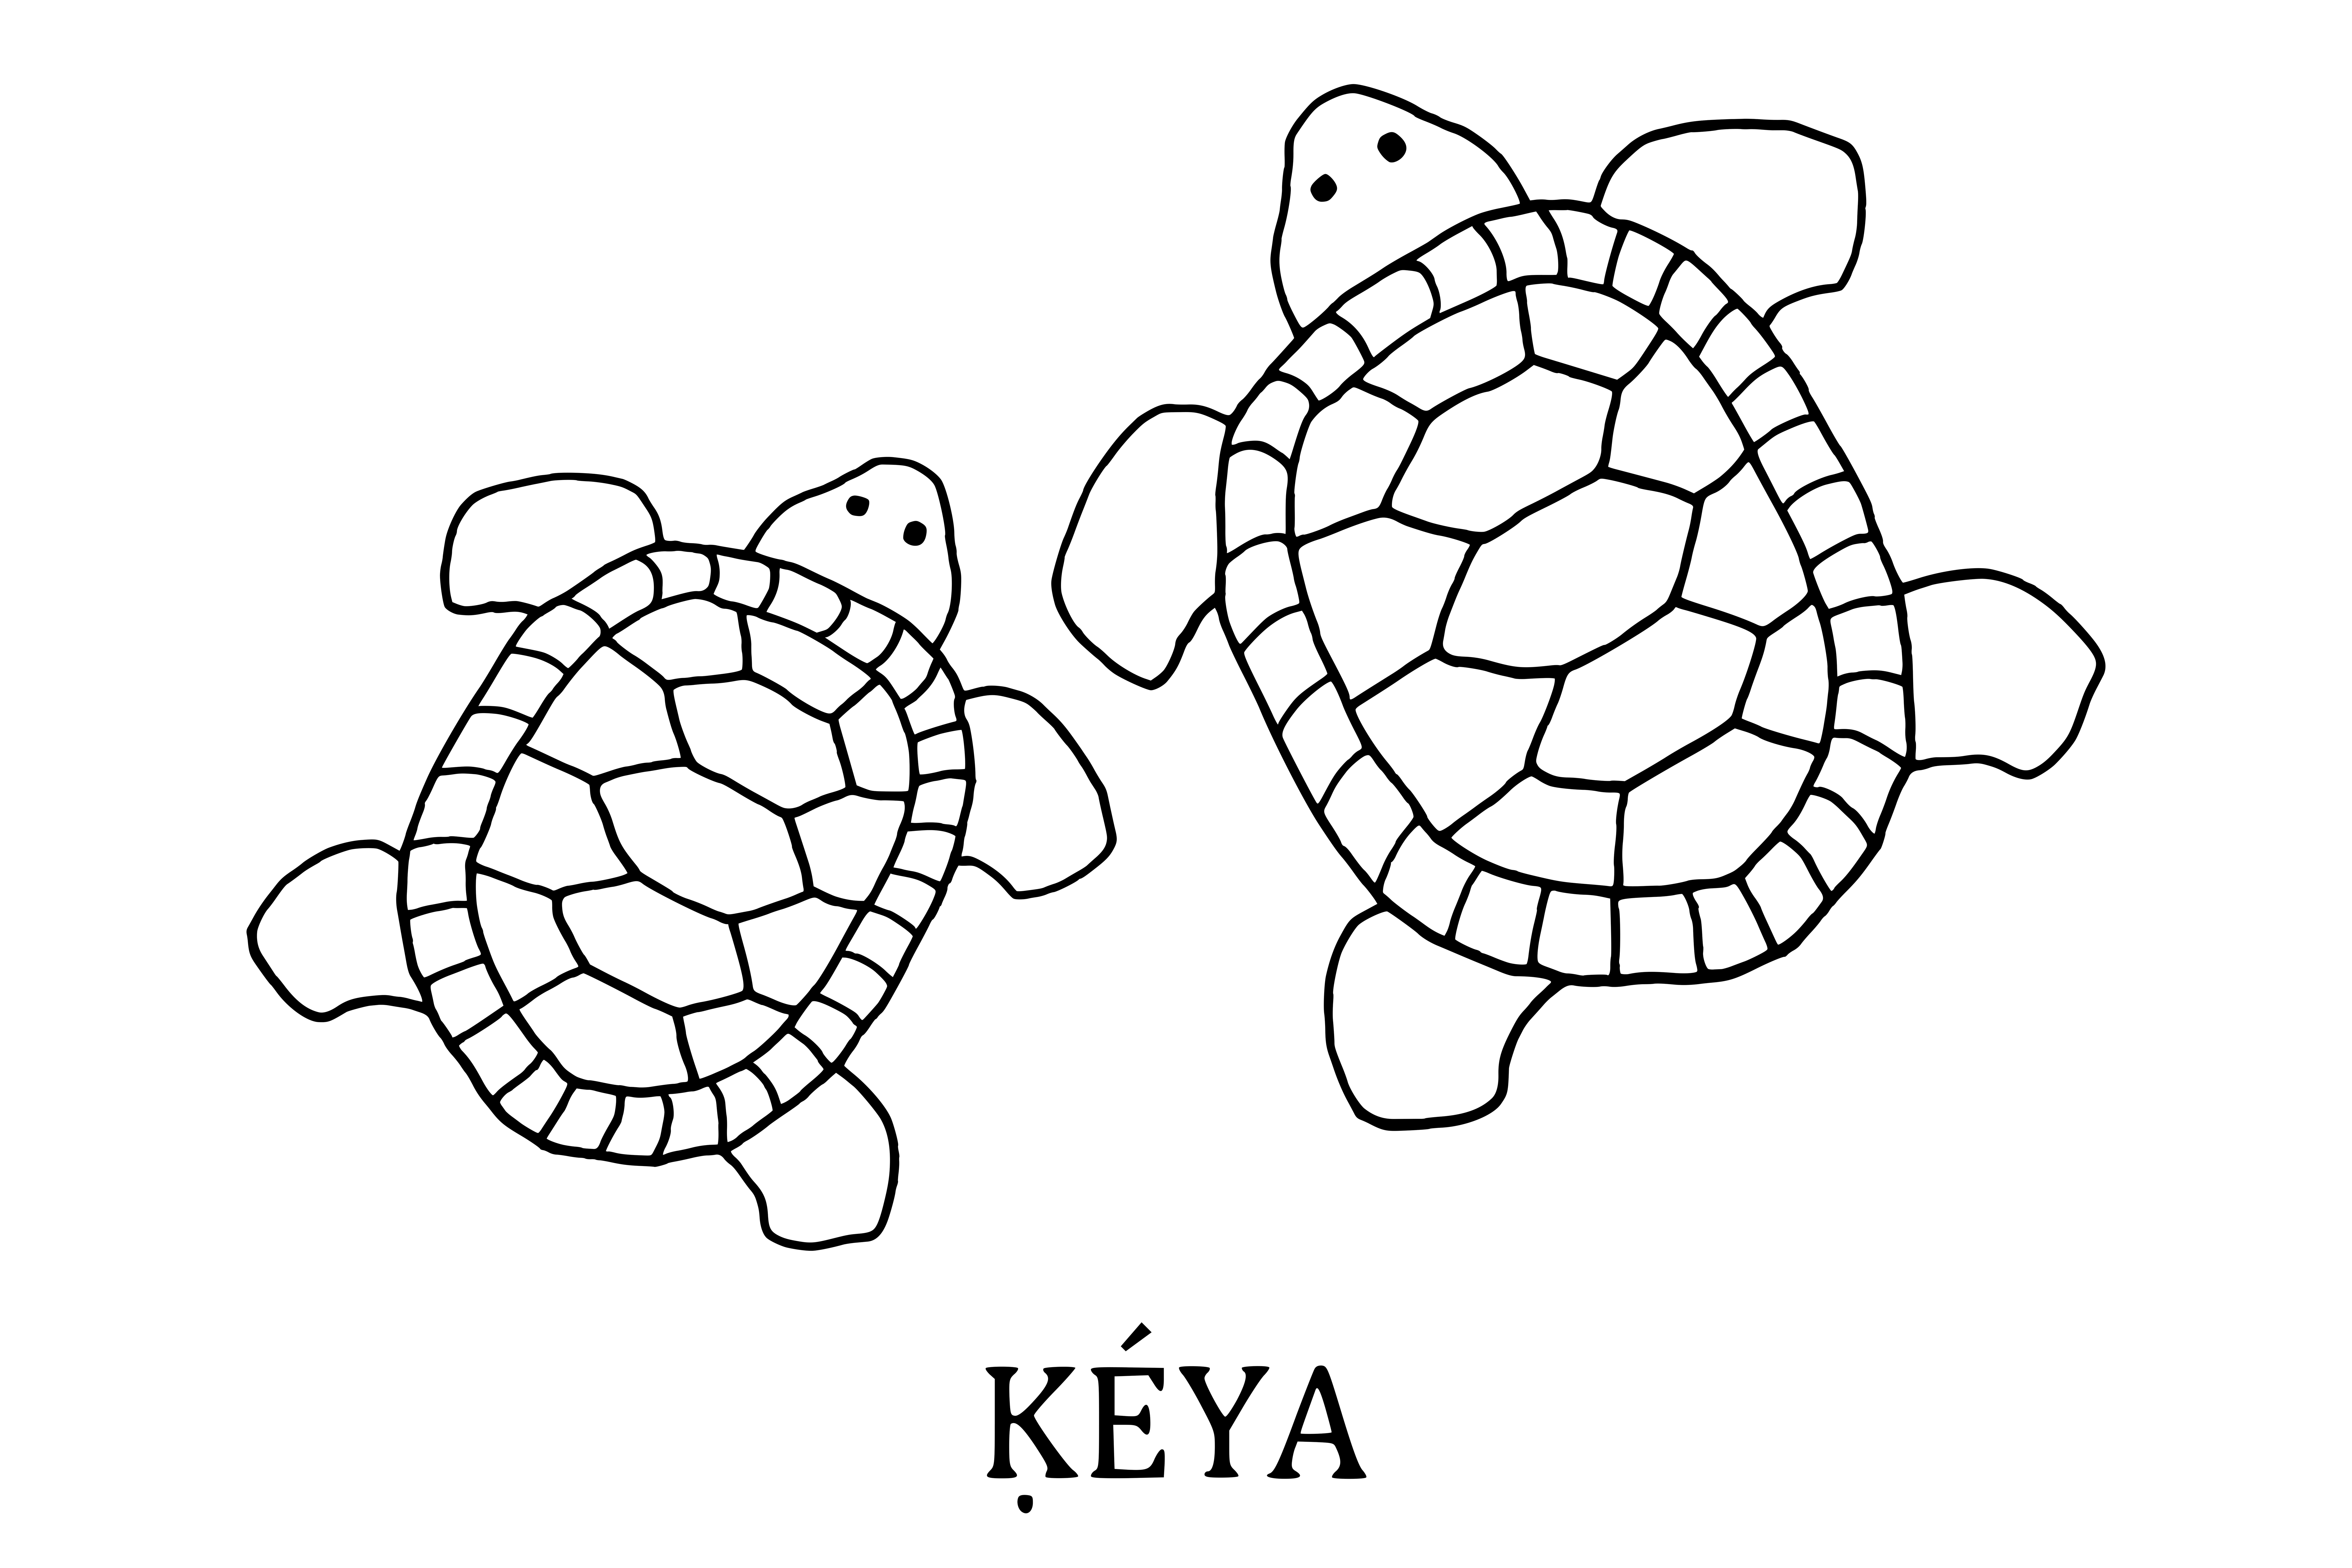 Keya-Turtle Sidewalk Stamp